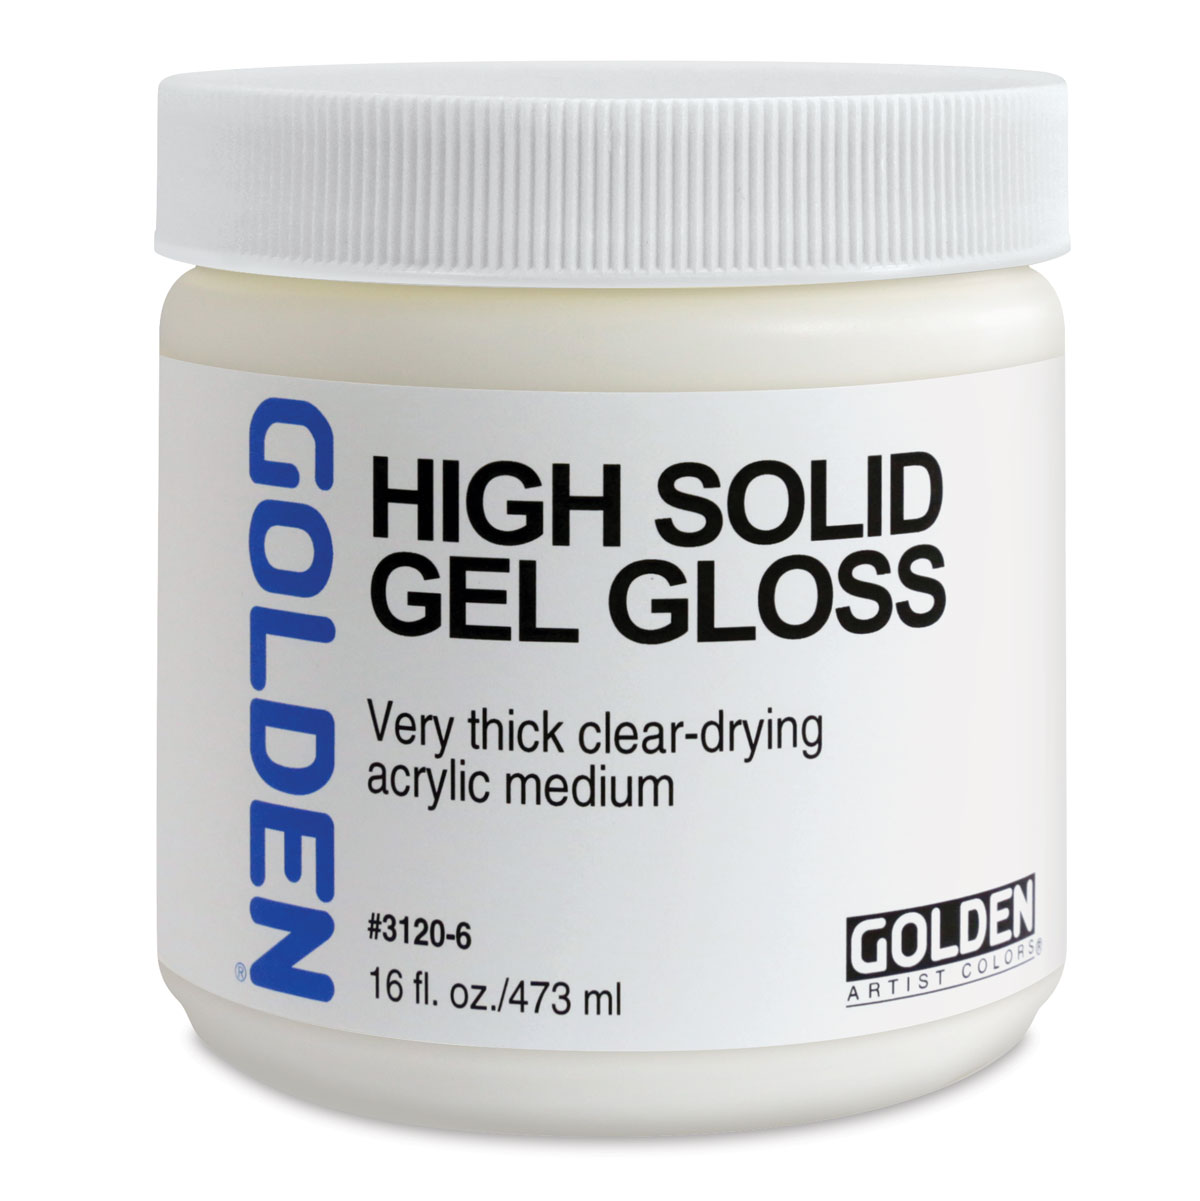 GOLDEN Acrylic Gel Mediums High Solid Gloss 1 Gallon